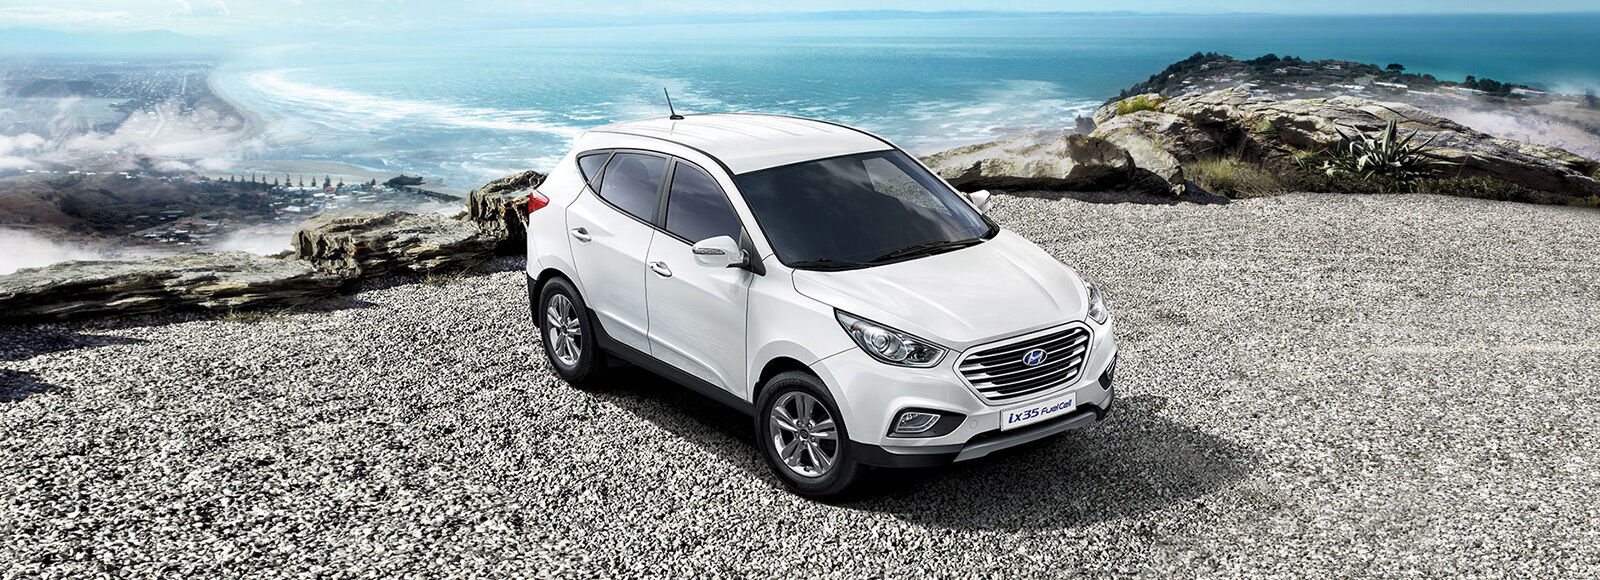 https://www.hyundai.com/content/dam/hyundai/template_en/en/images/find-a-car/pip/ix35-fuel-cell/exterior/ix35-fuel-cell-design-side-front-white-parked-seashore-white-pc.jpg